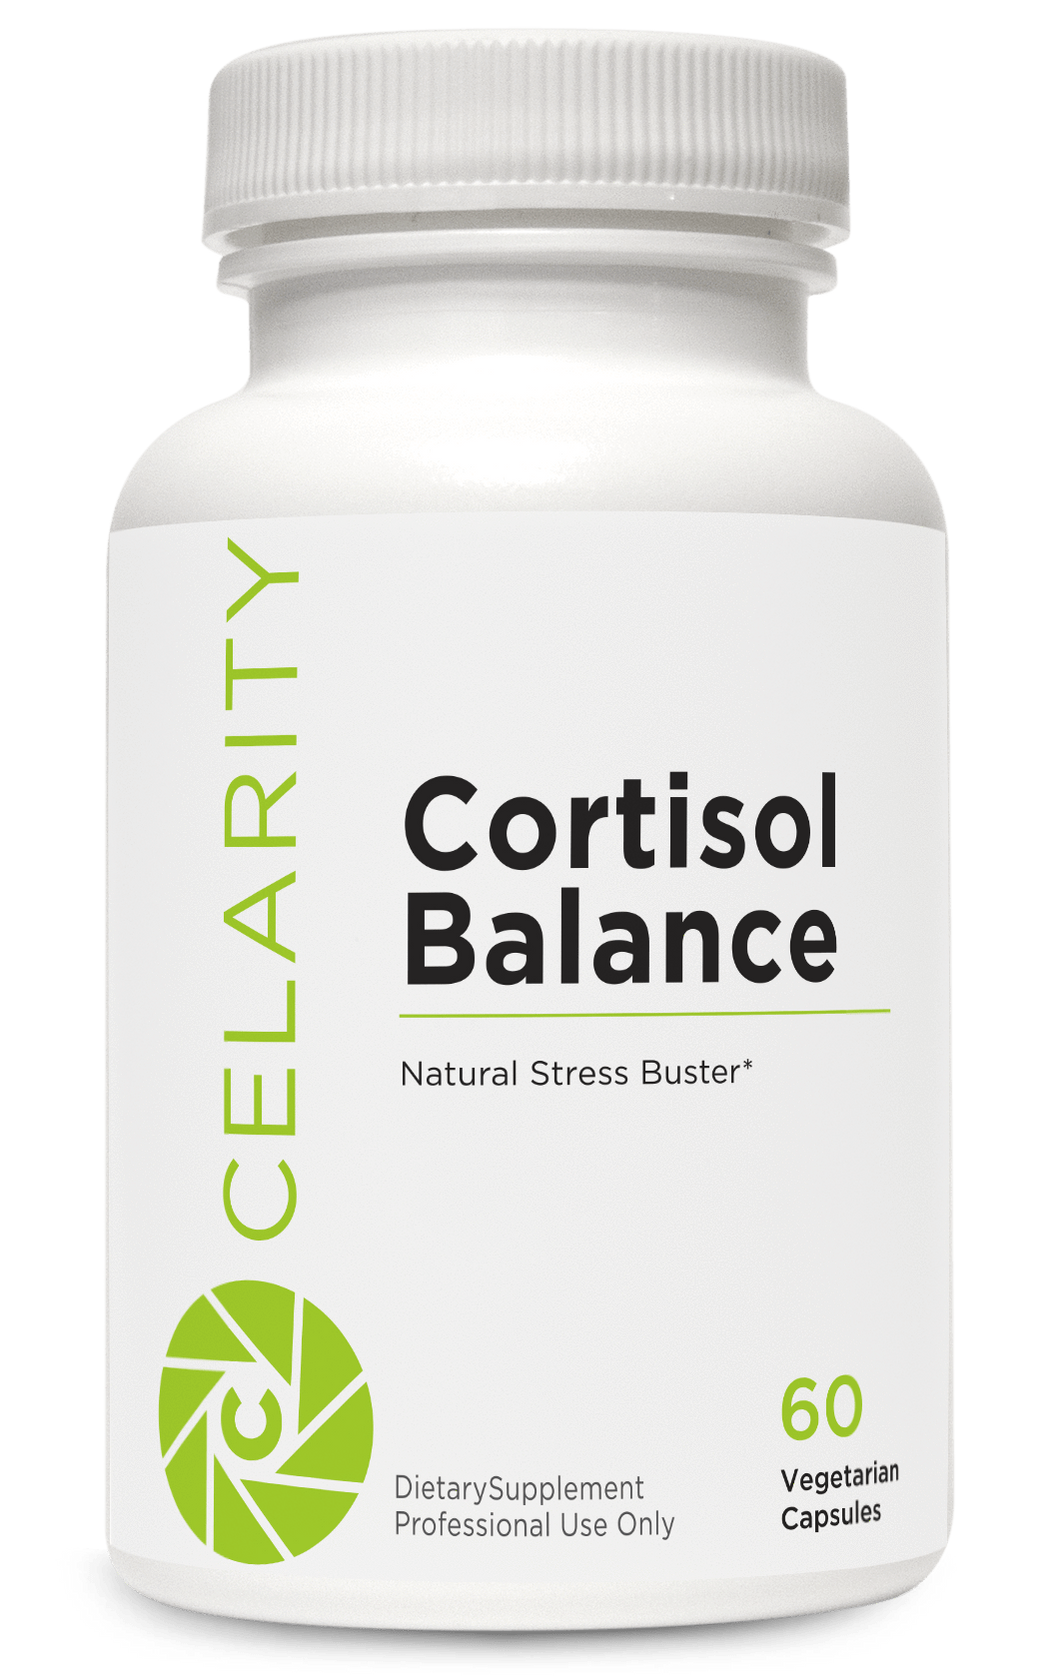 Cortisol Balance